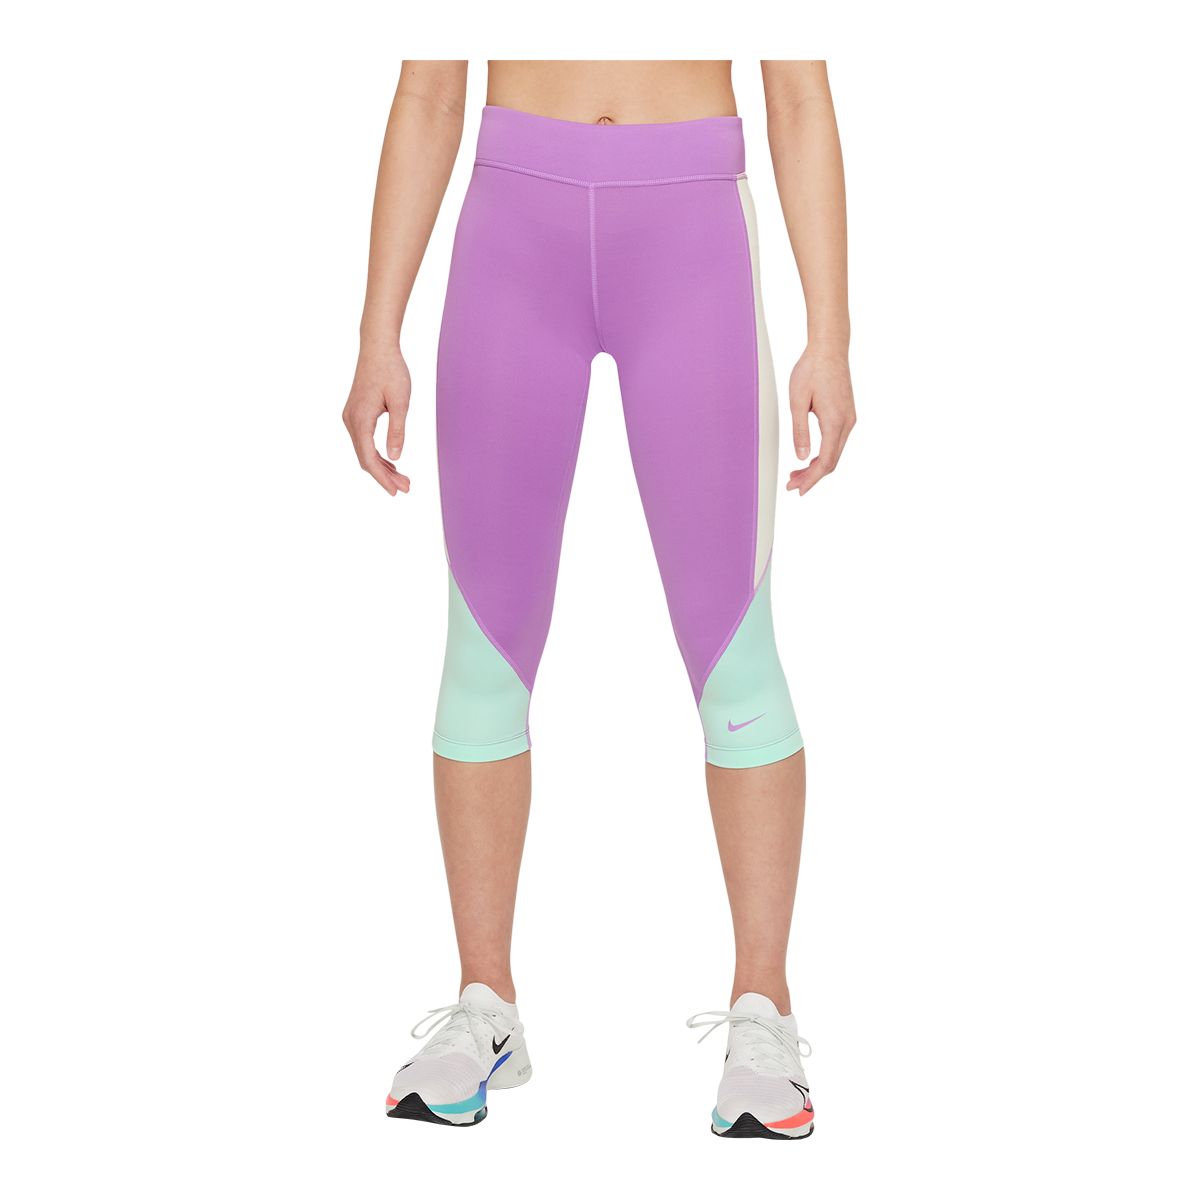 7866 NEW NIKE Dri Fit Tight Crops Capri Running Yoga Pants Gym